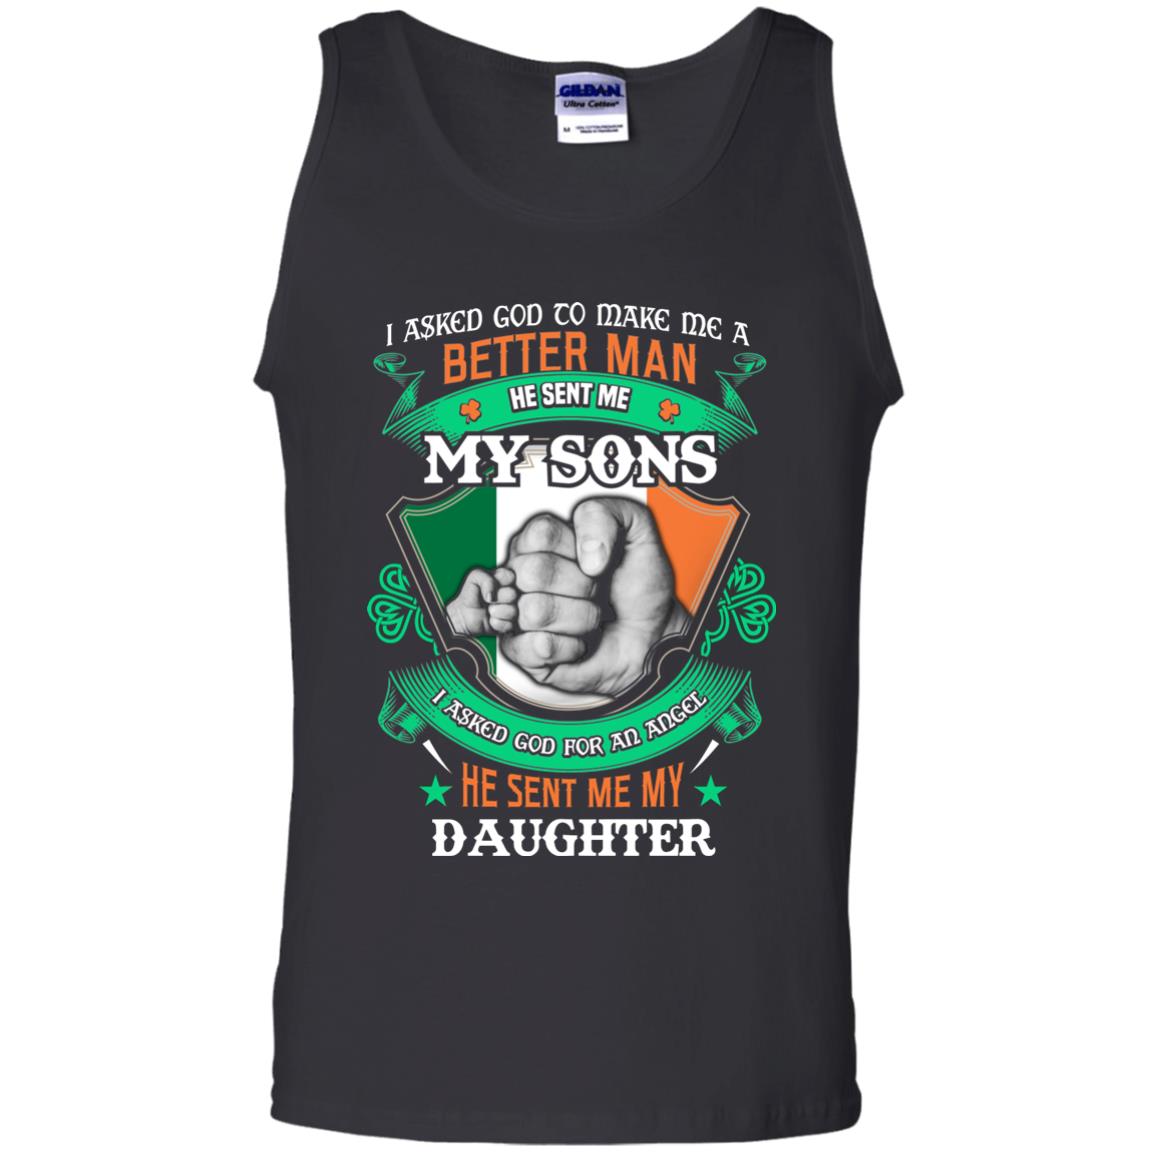 He Sent Me My Sons He Sent Me My Daughter Saint Patrick's Day Shirt For DadG220 Gildan 100% Cotton Tank Top